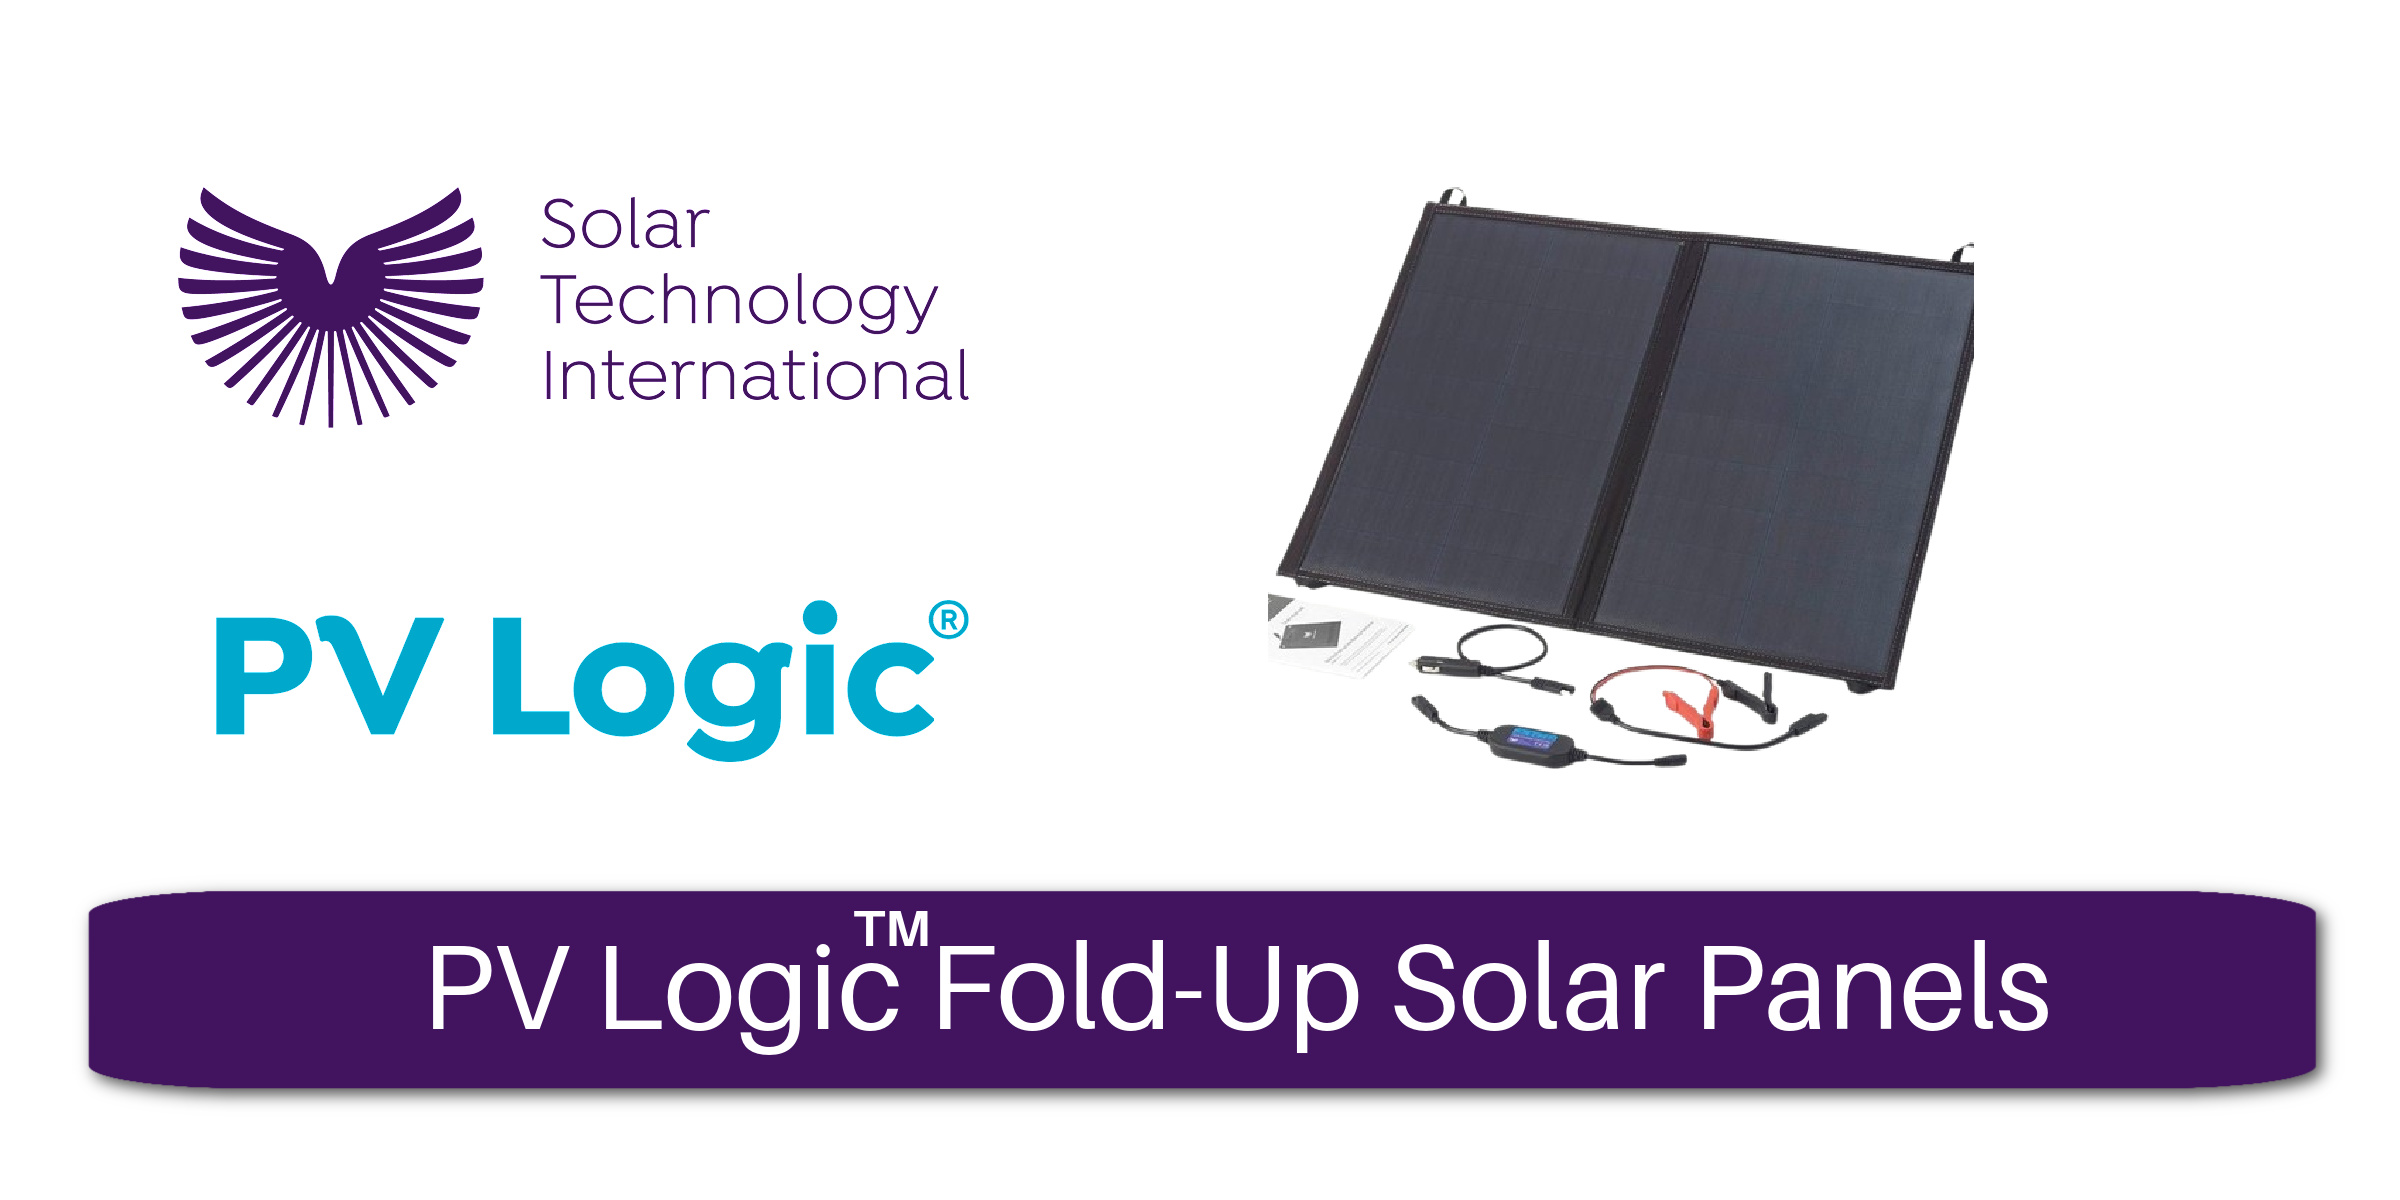 PV Logic Fold-Up Solar Panels